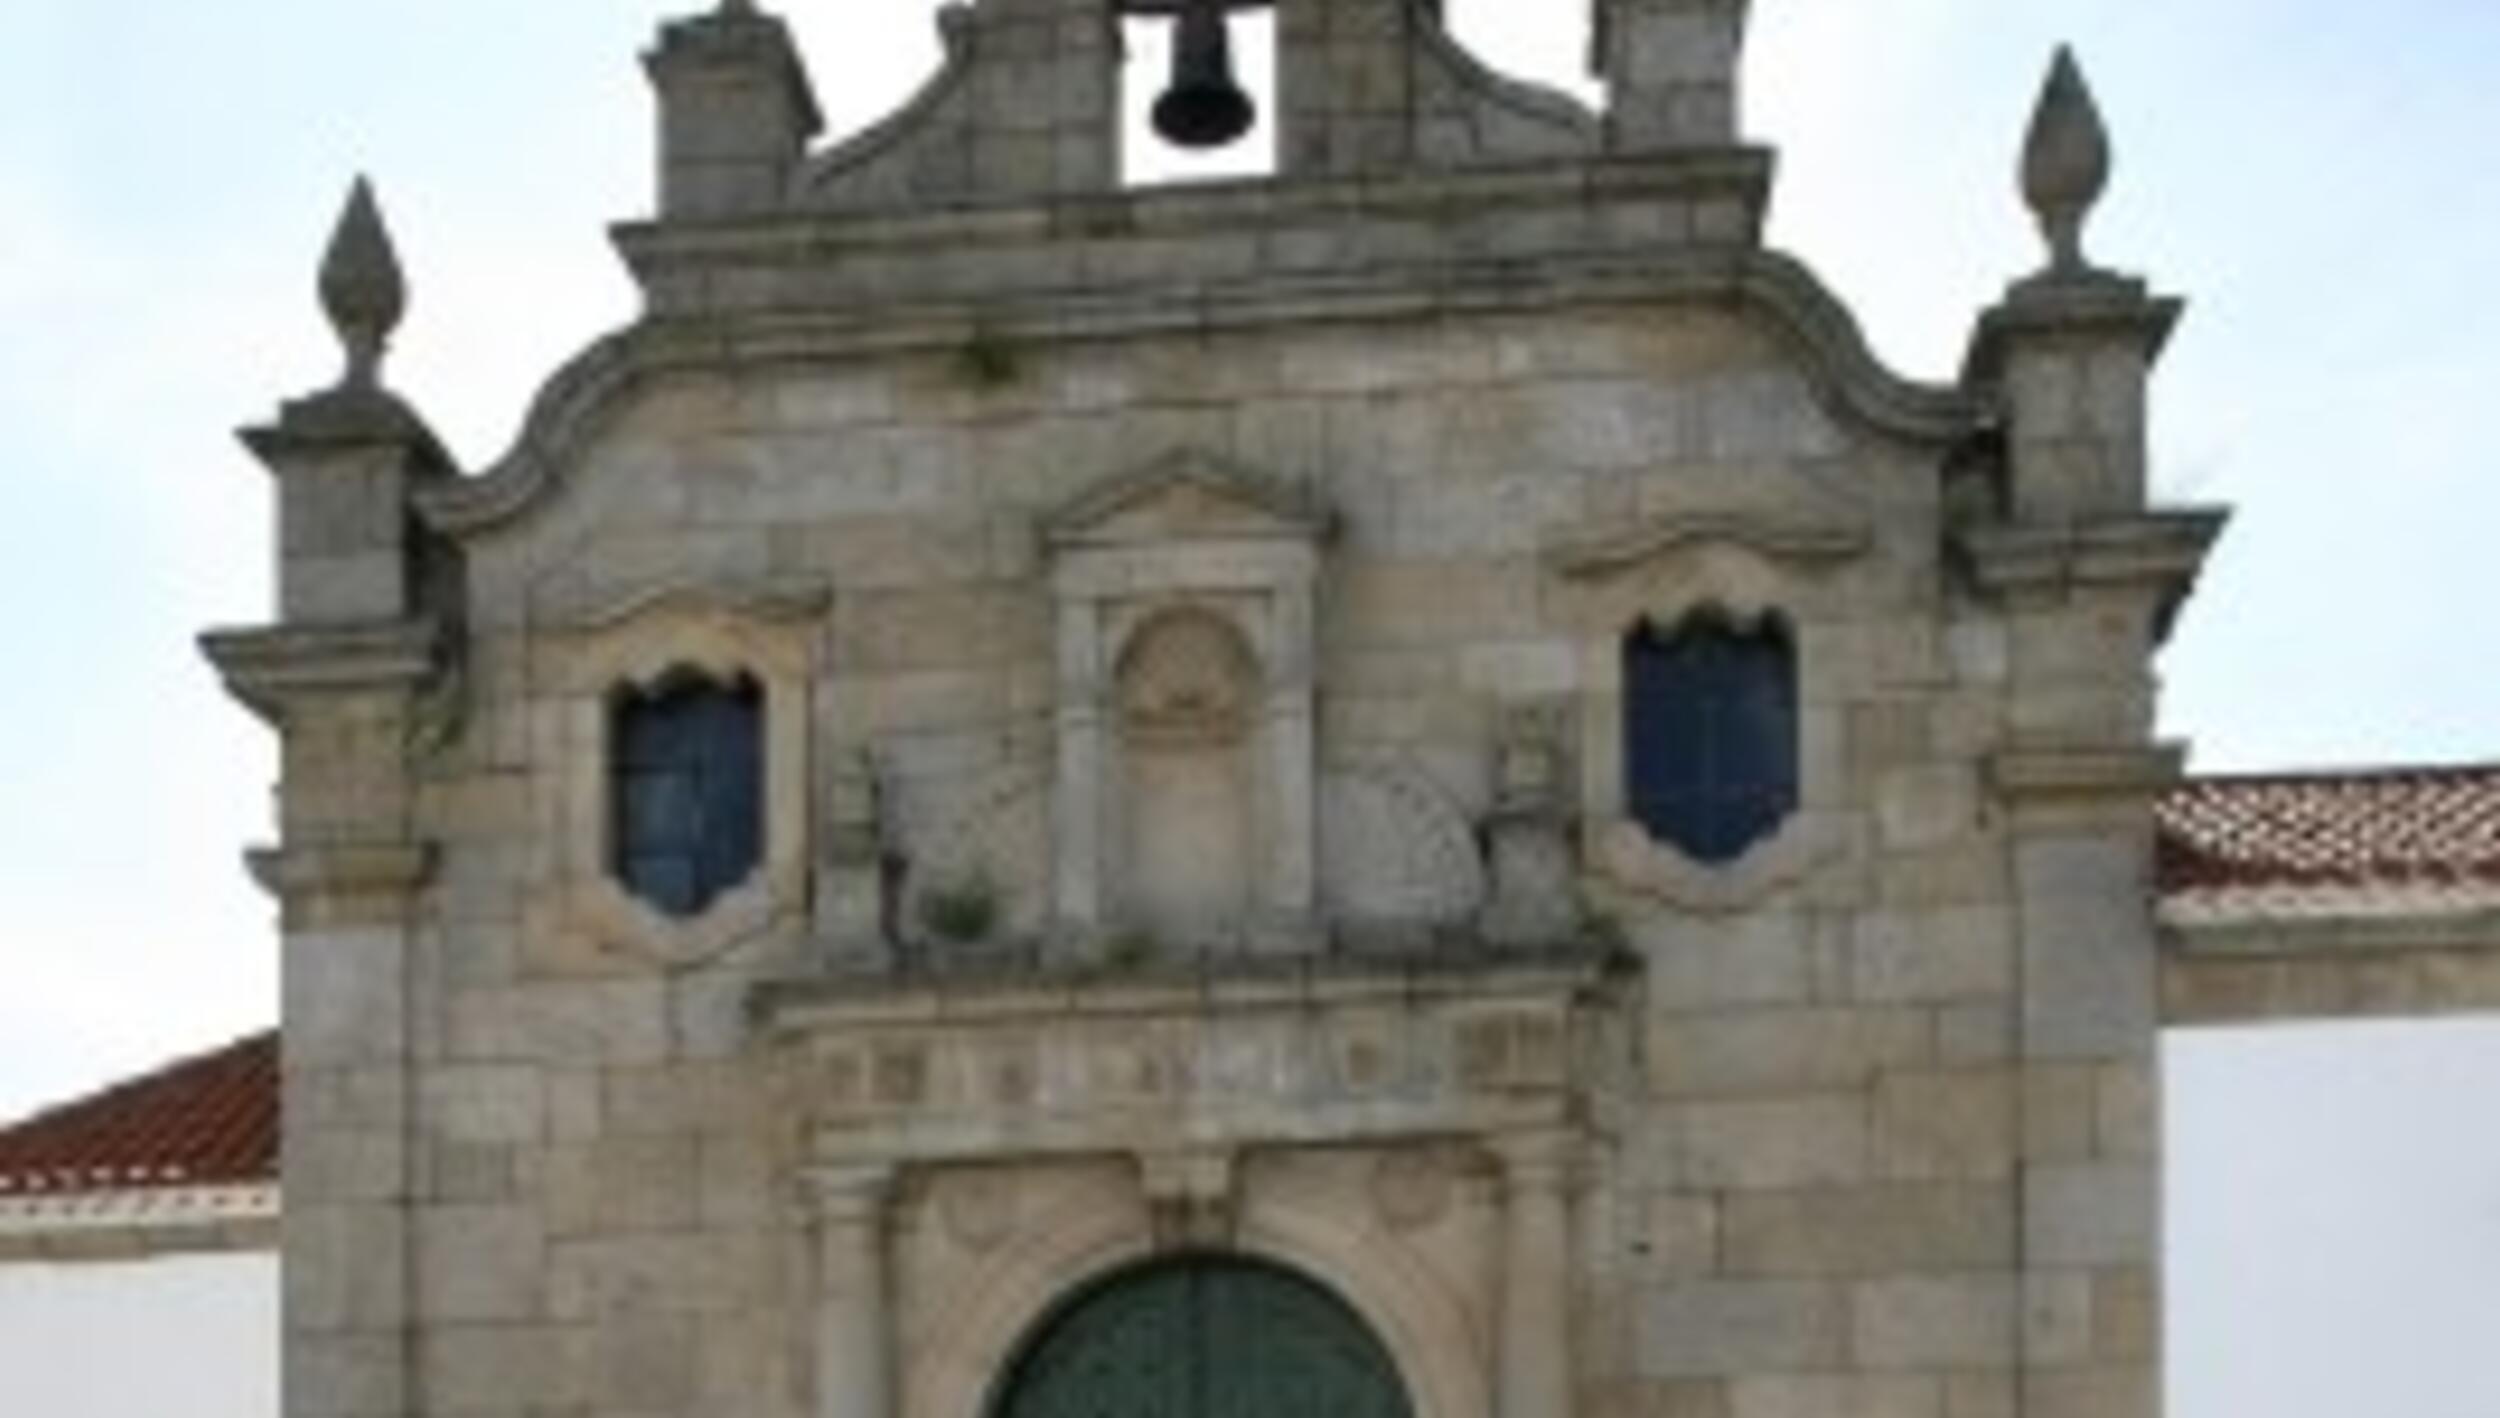 Igreja da Misericórdia de Miranda do Douro